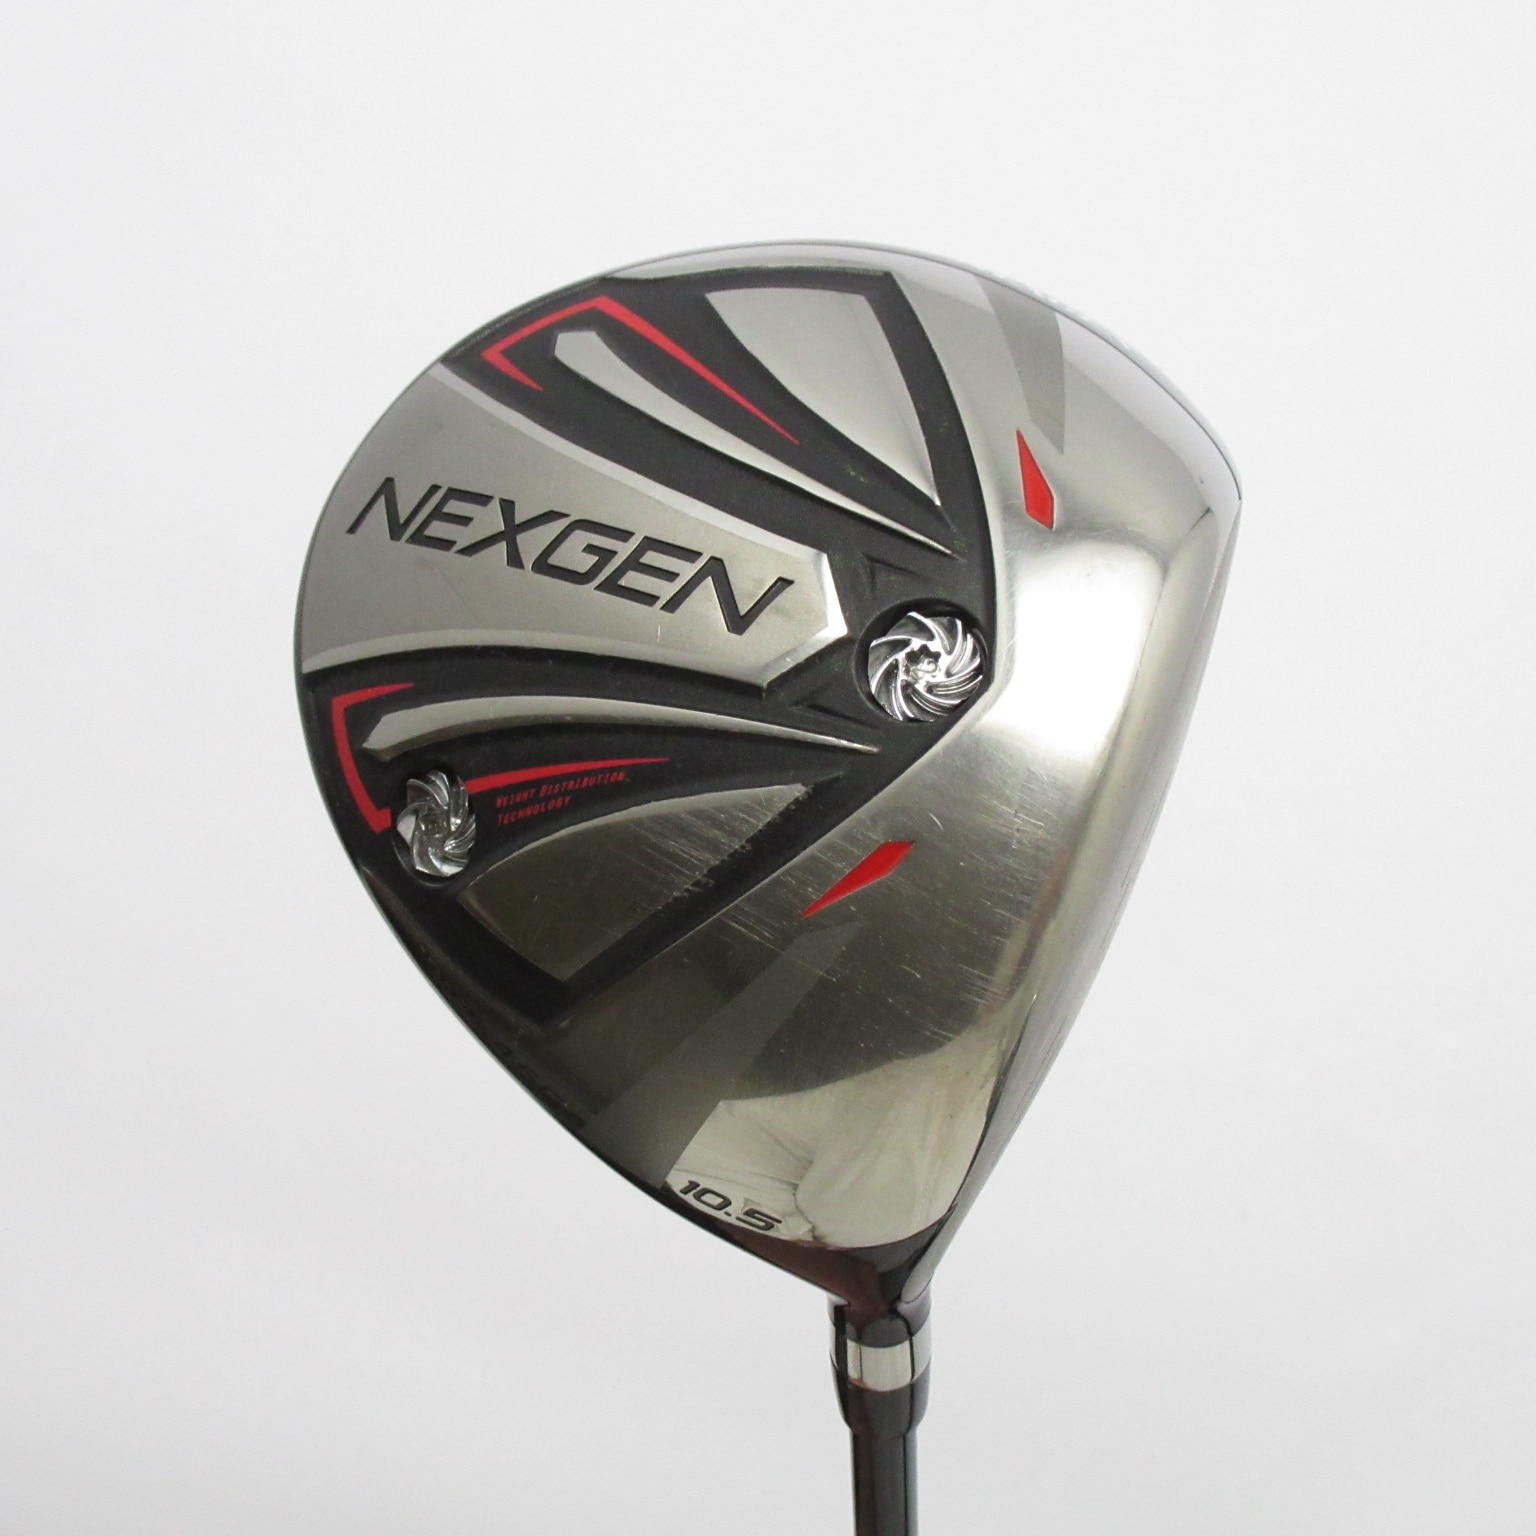 NEXGEN 7 TYPE-460 ドライバー - ゴルフ